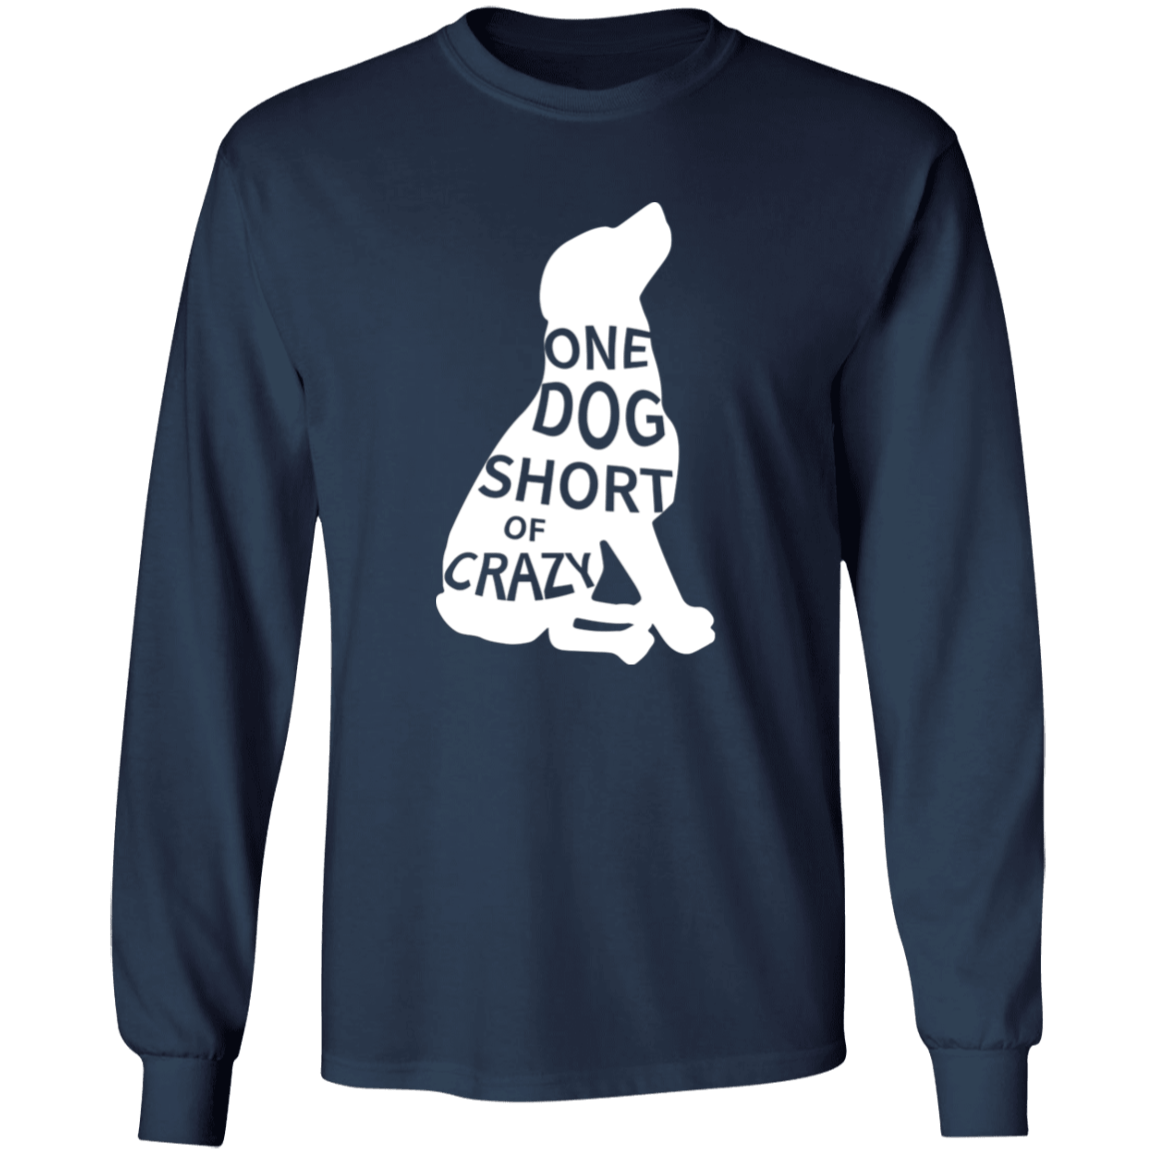 One Dog Short Of Crazy - Long Sleeve T Shirt.